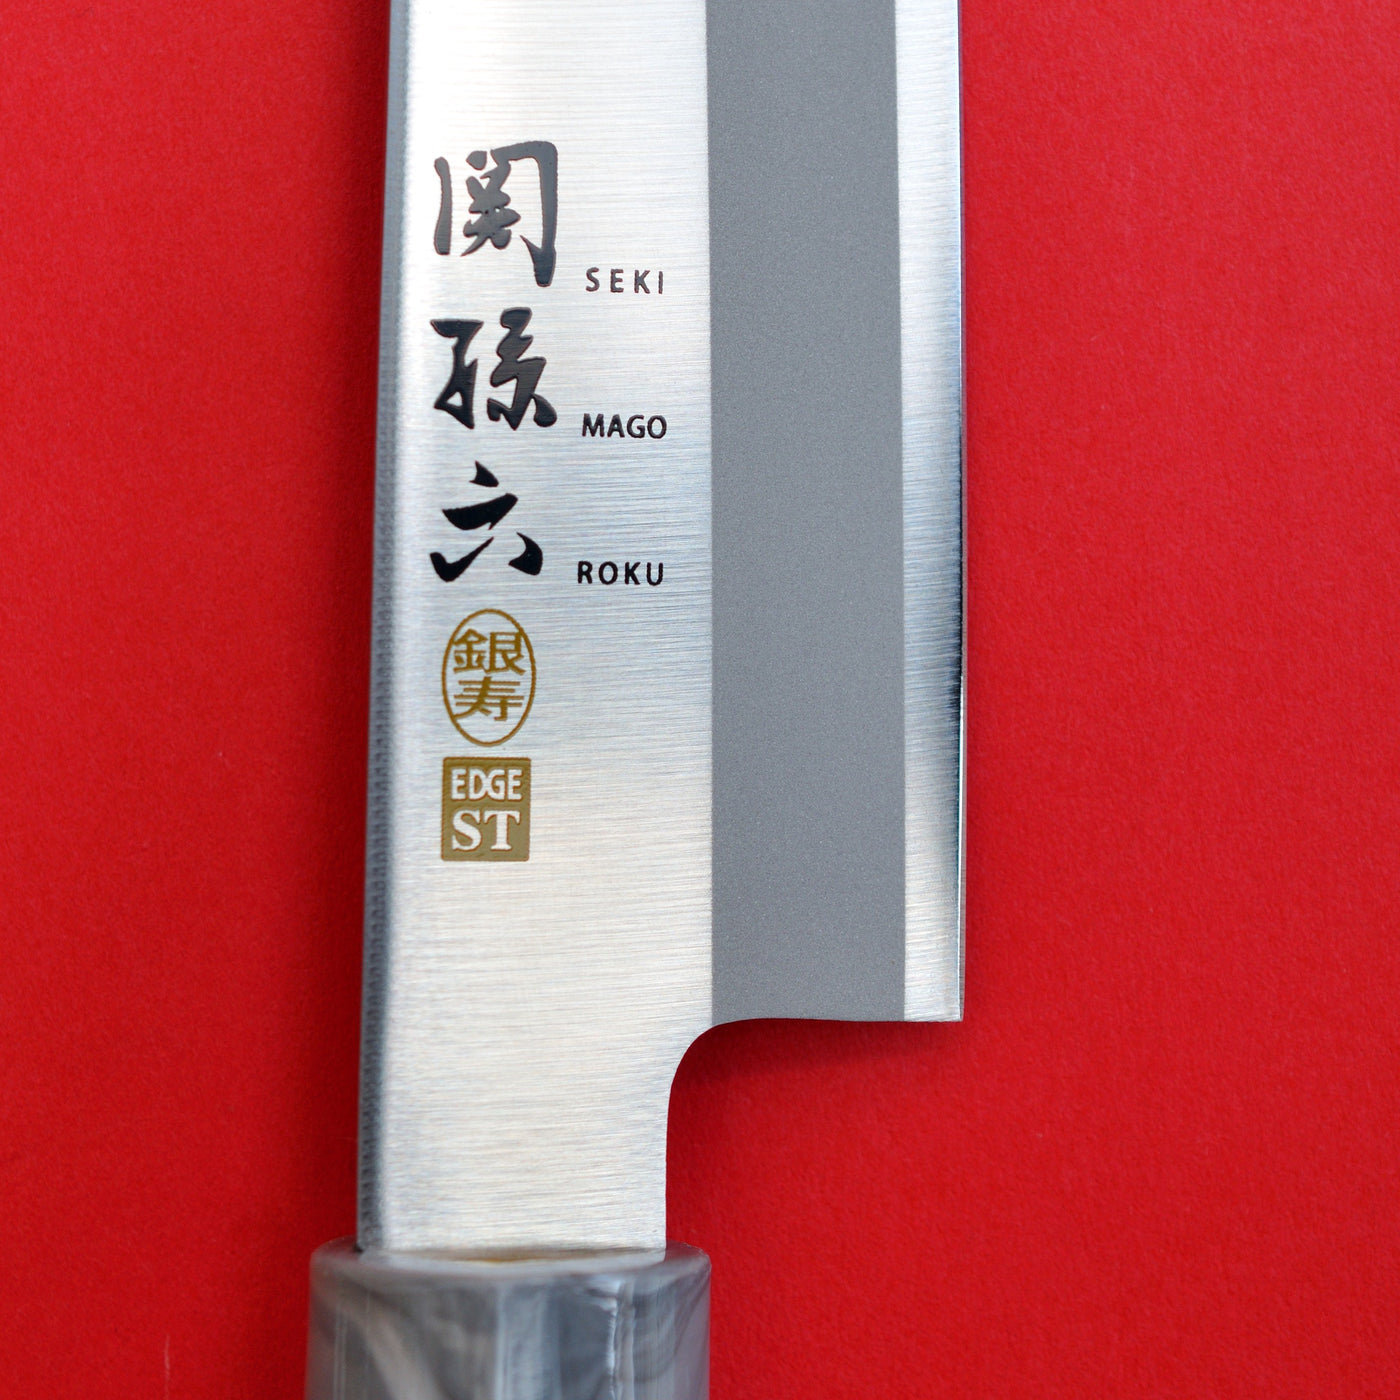 Kitchen Knife knives set KAI Stainless carbon Clad steel AOFUJI Japan -  Osaka Tools